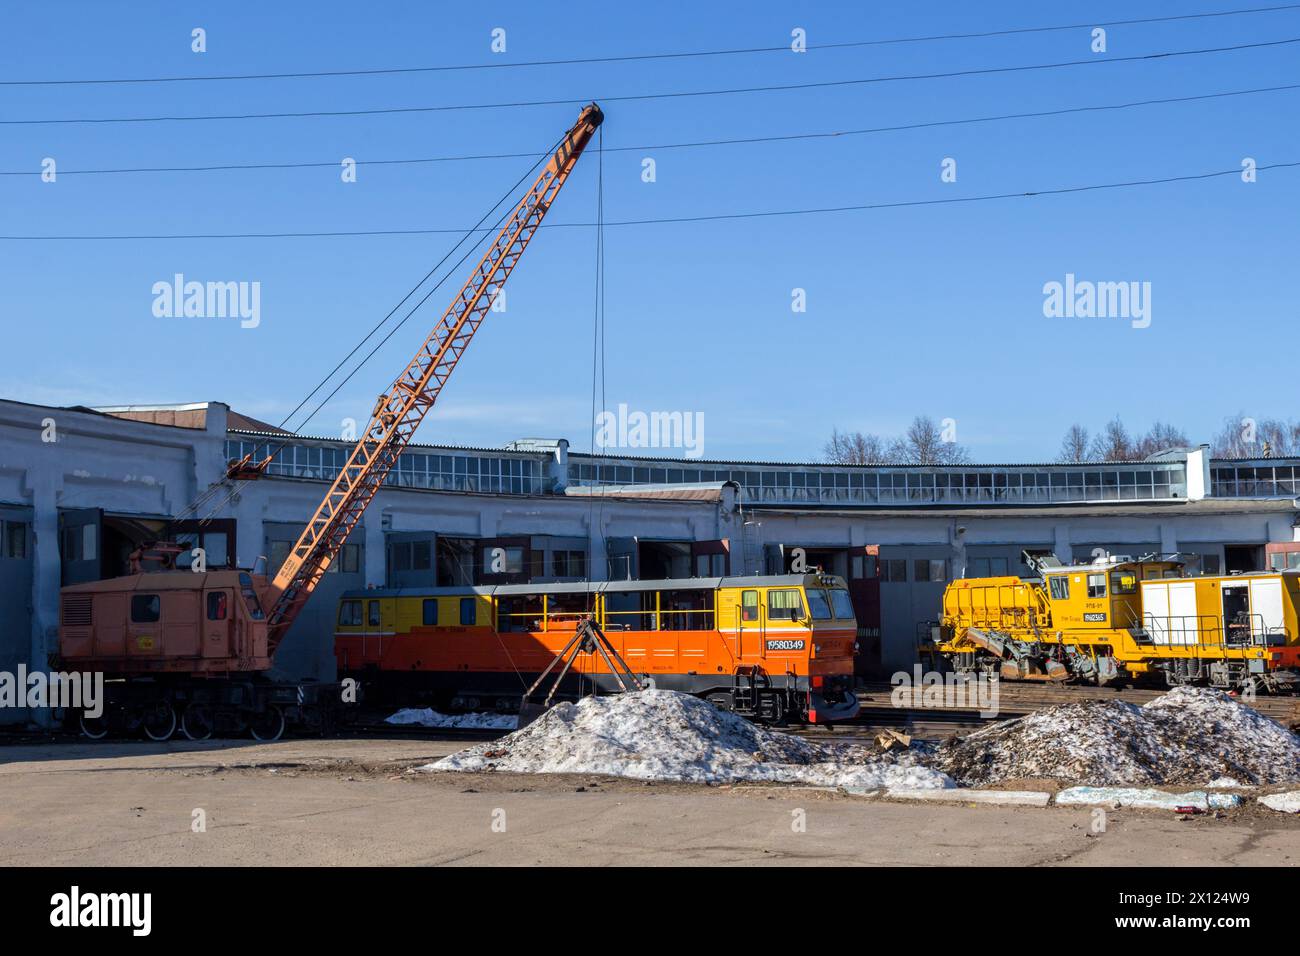 Railway Depot at the Maloyaroslavets station: Maloyaroslavets, Russia - April 2018 Stock Photo